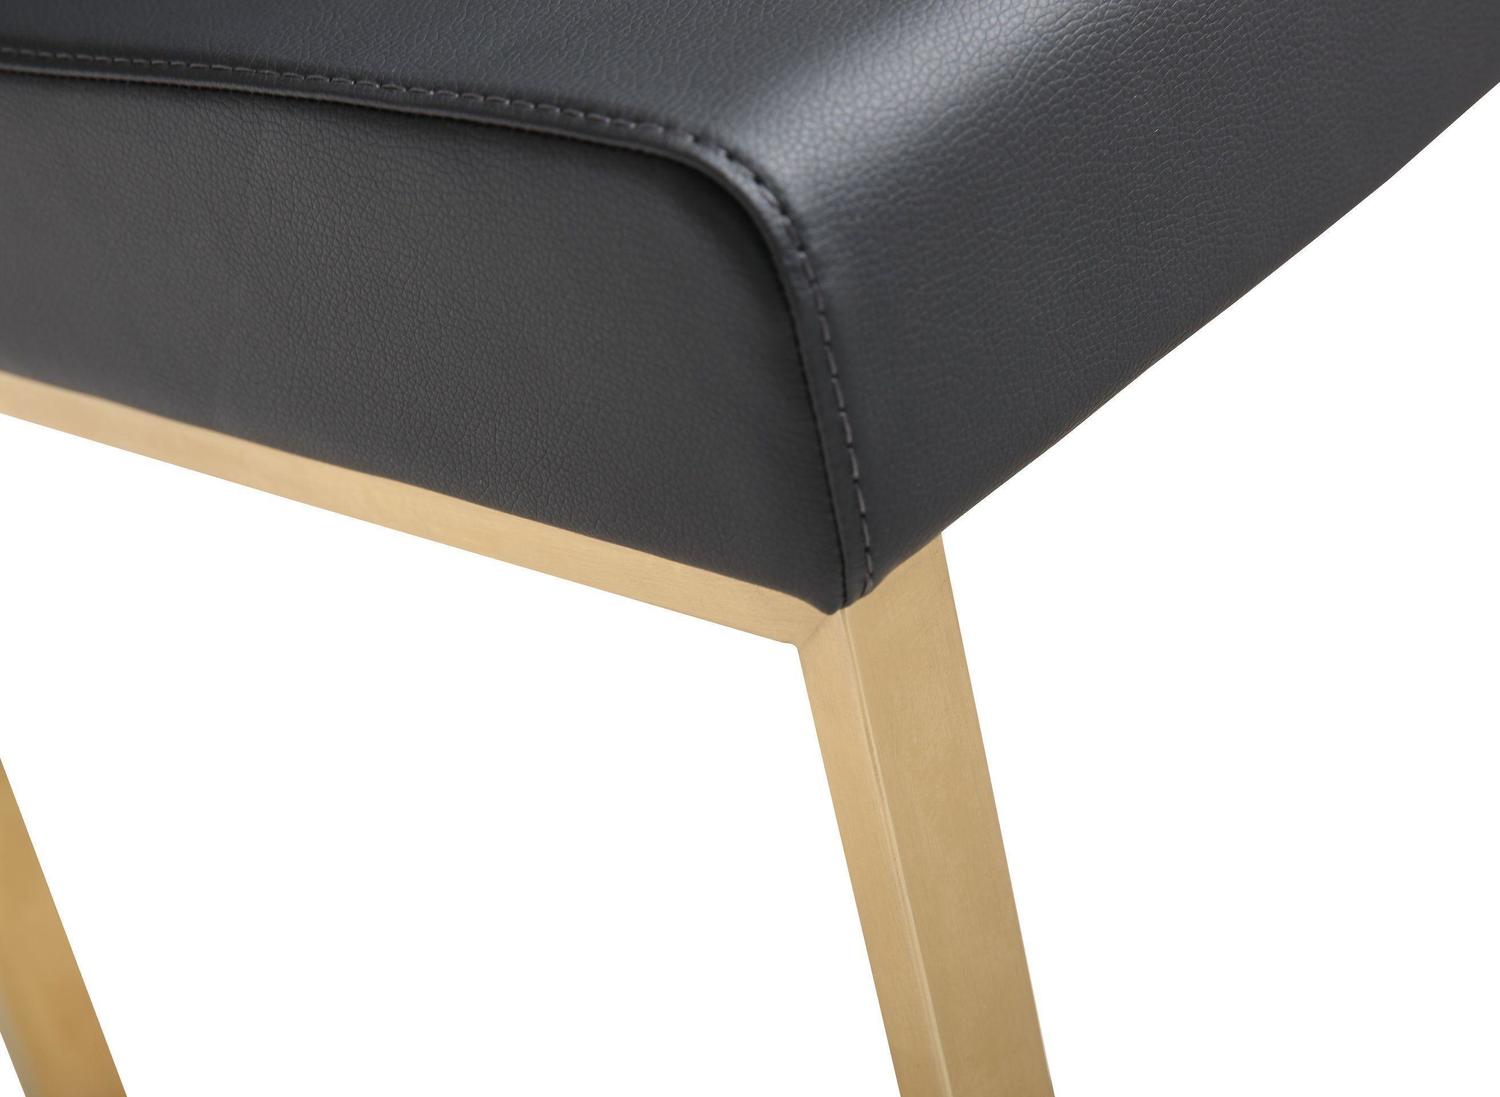 unique bar stools for kitchen island Tov Furniture Stools Black